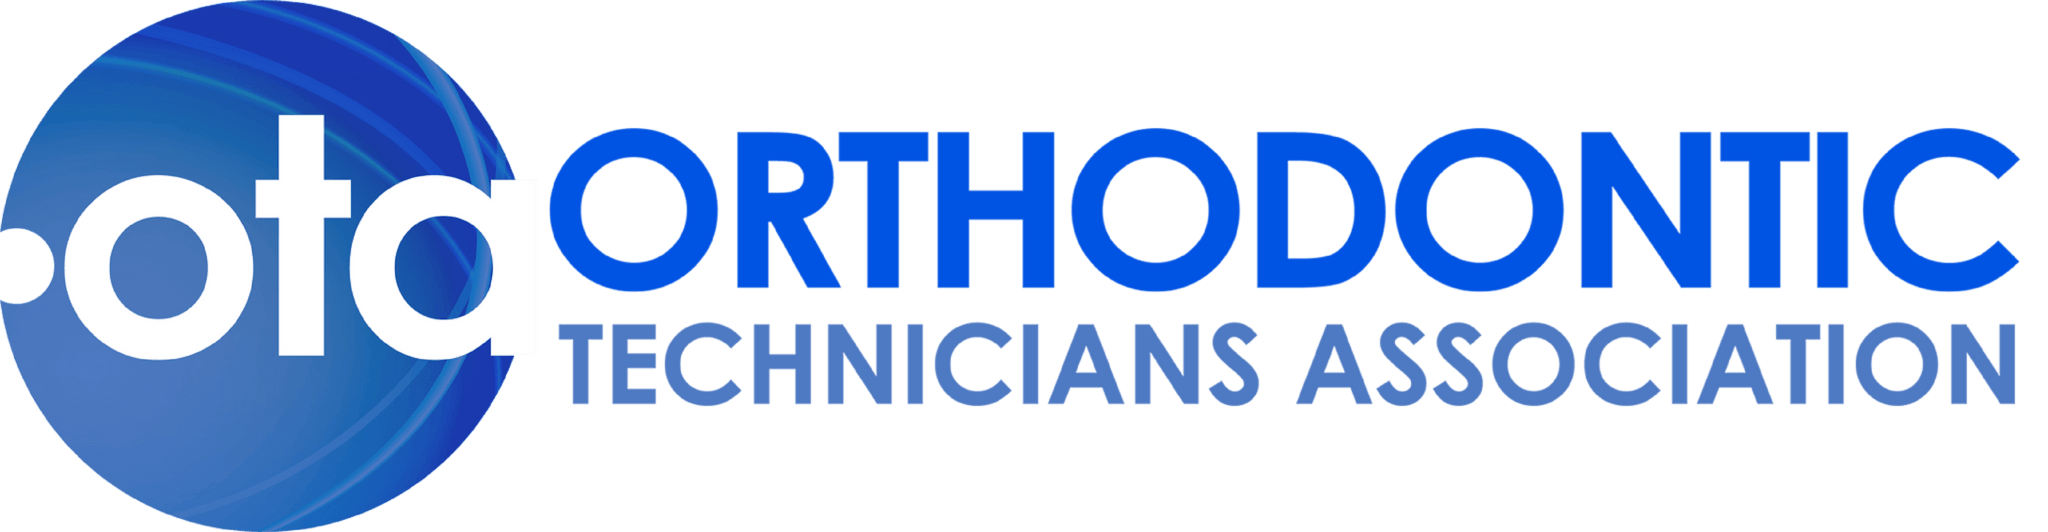 Orthodontic Technicians Association new brand identity